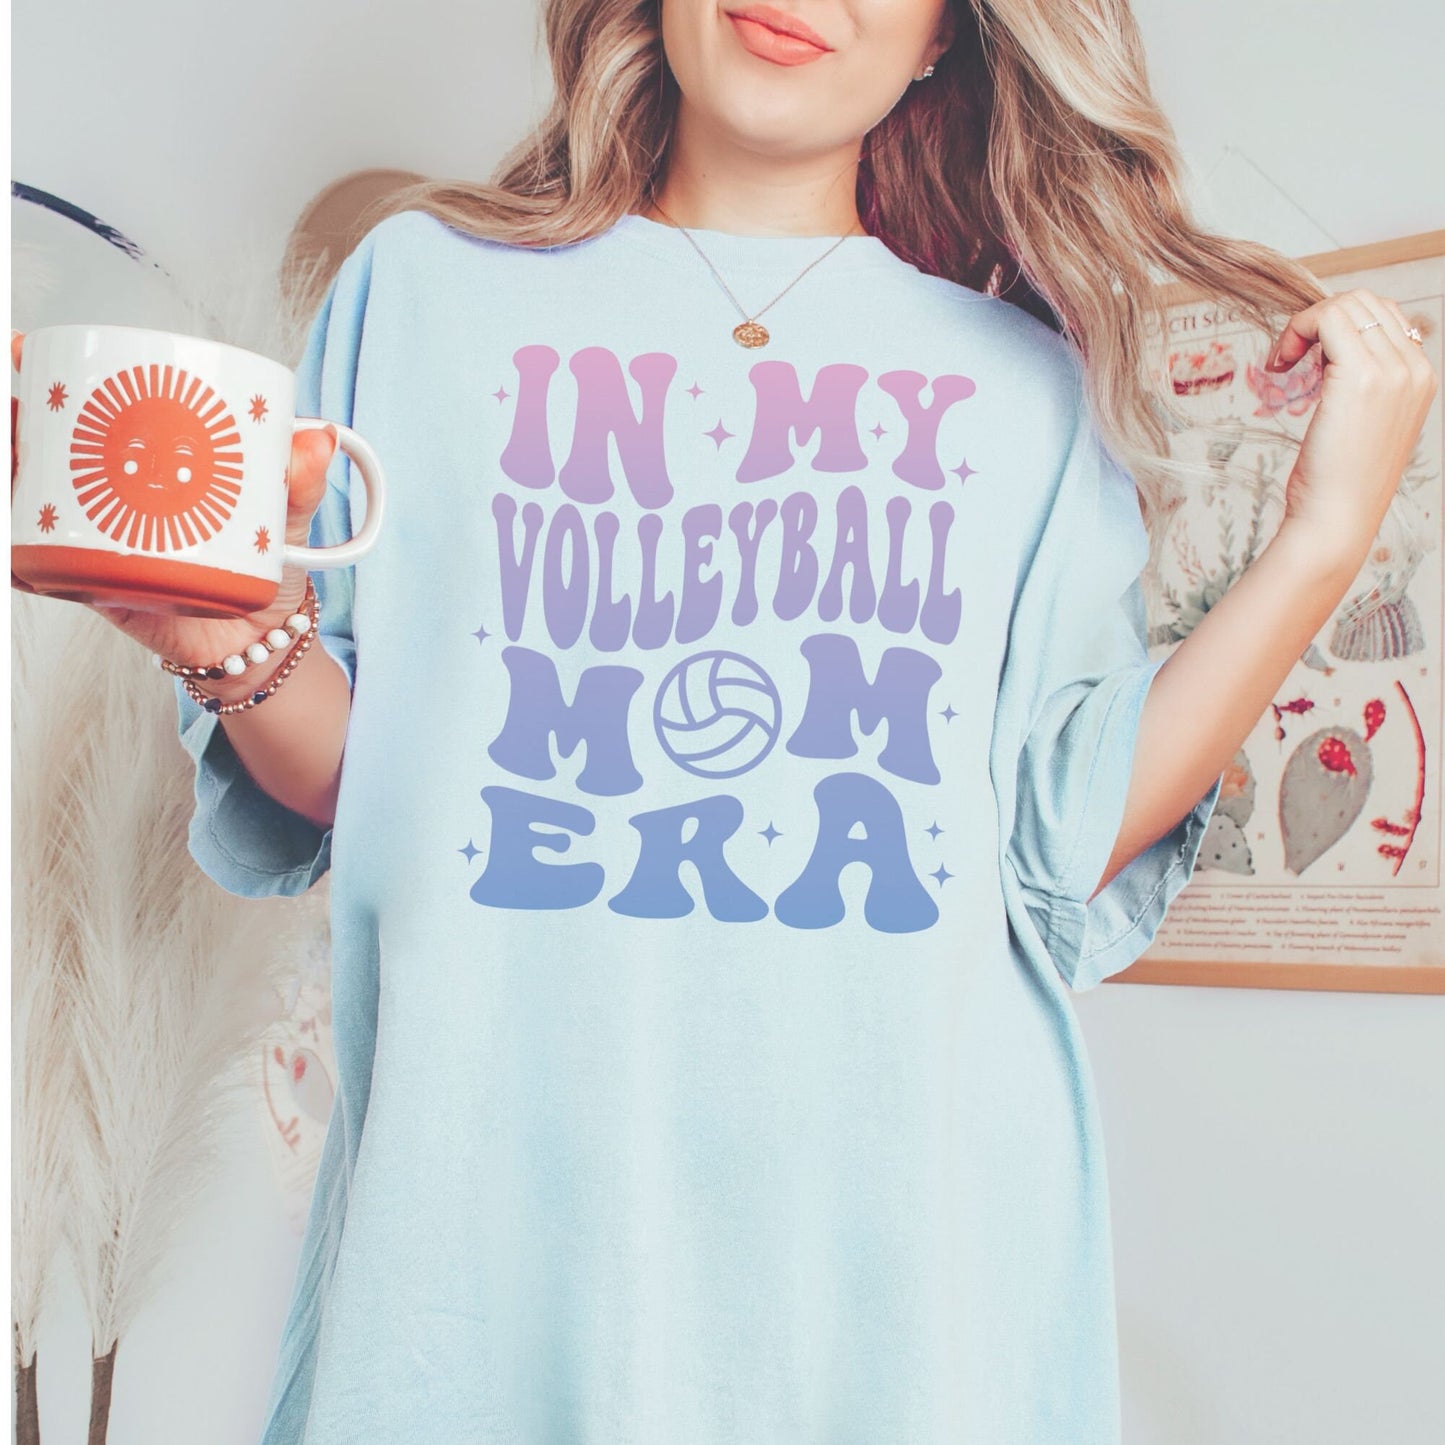 In My Volleyball Mom Era Shirt